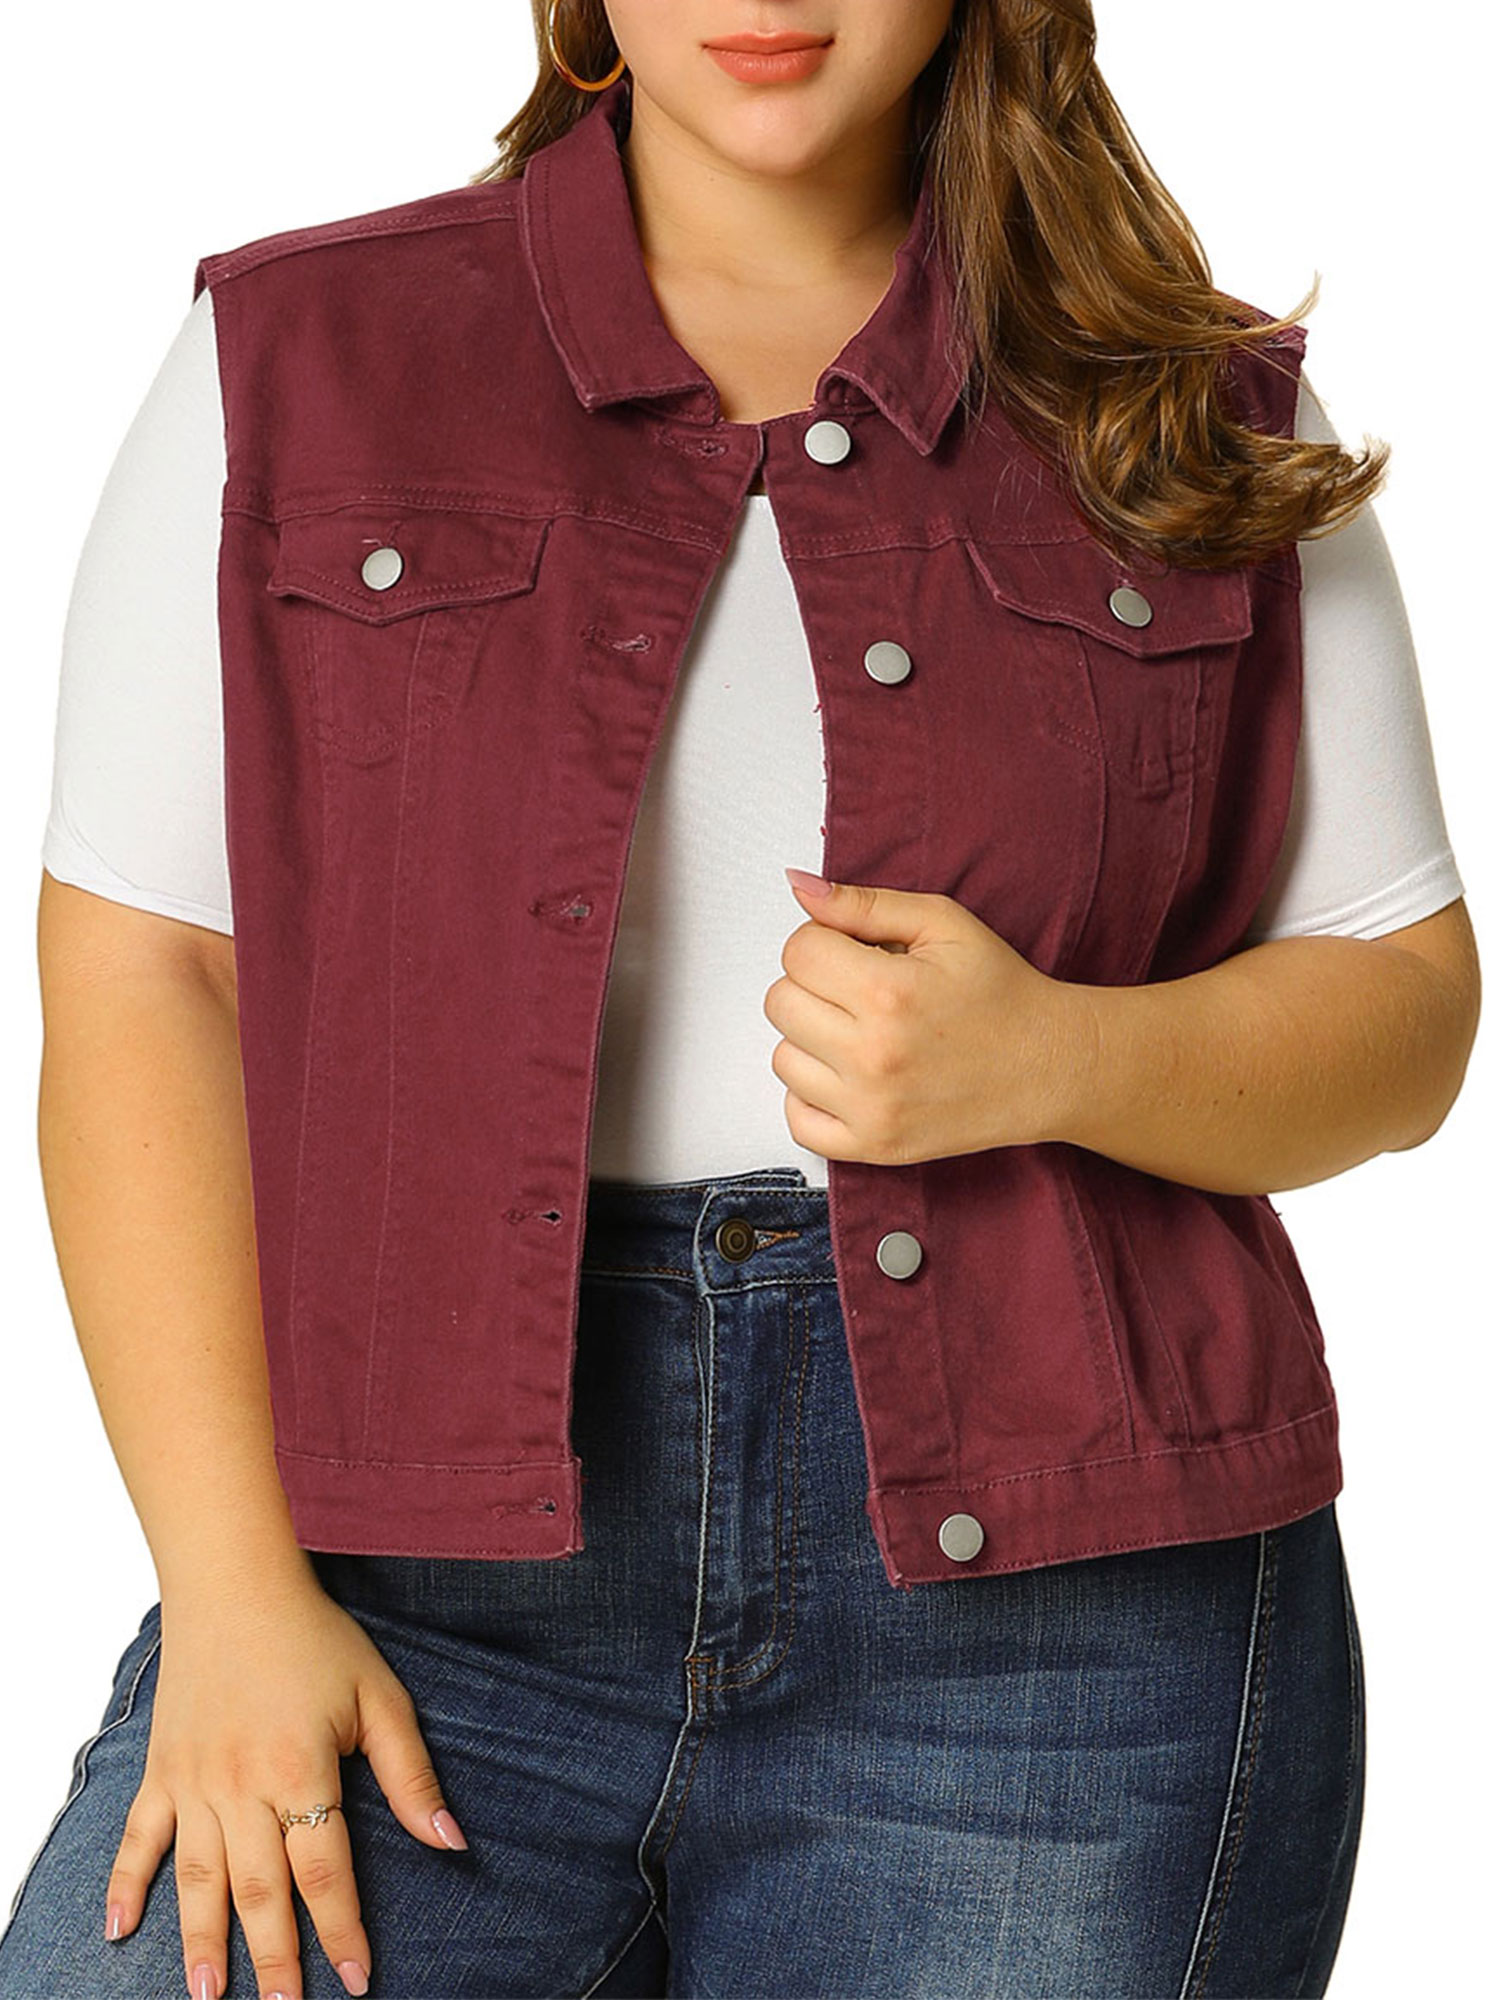 Agnes Orinda Women's Plus Size Casual Button Sleeveless Denim Vest Jacket - image 1 of 7